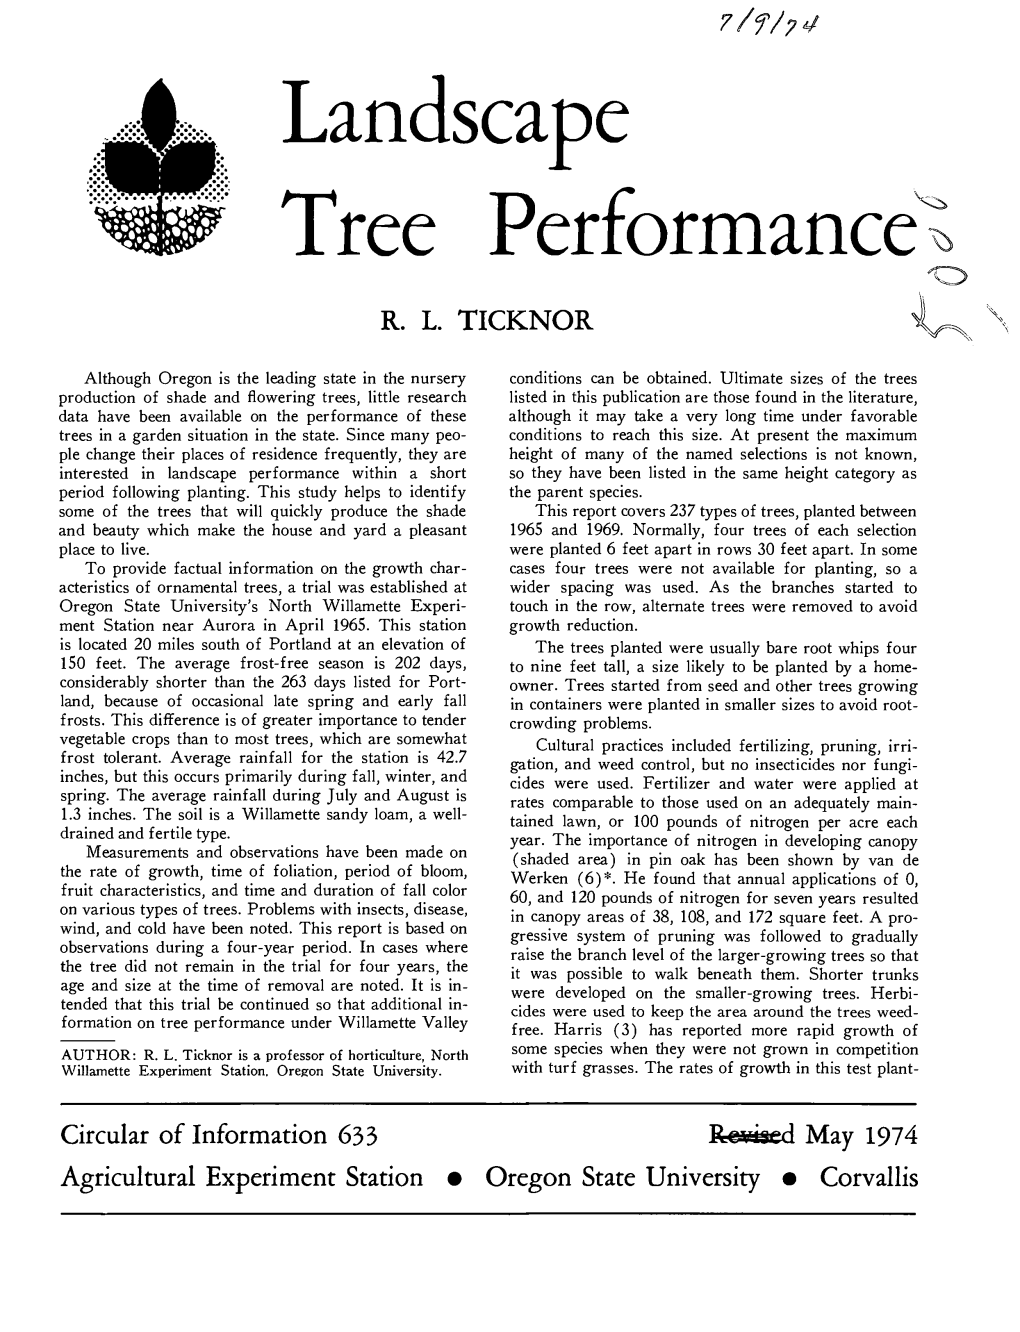 Landscape Tree Performance